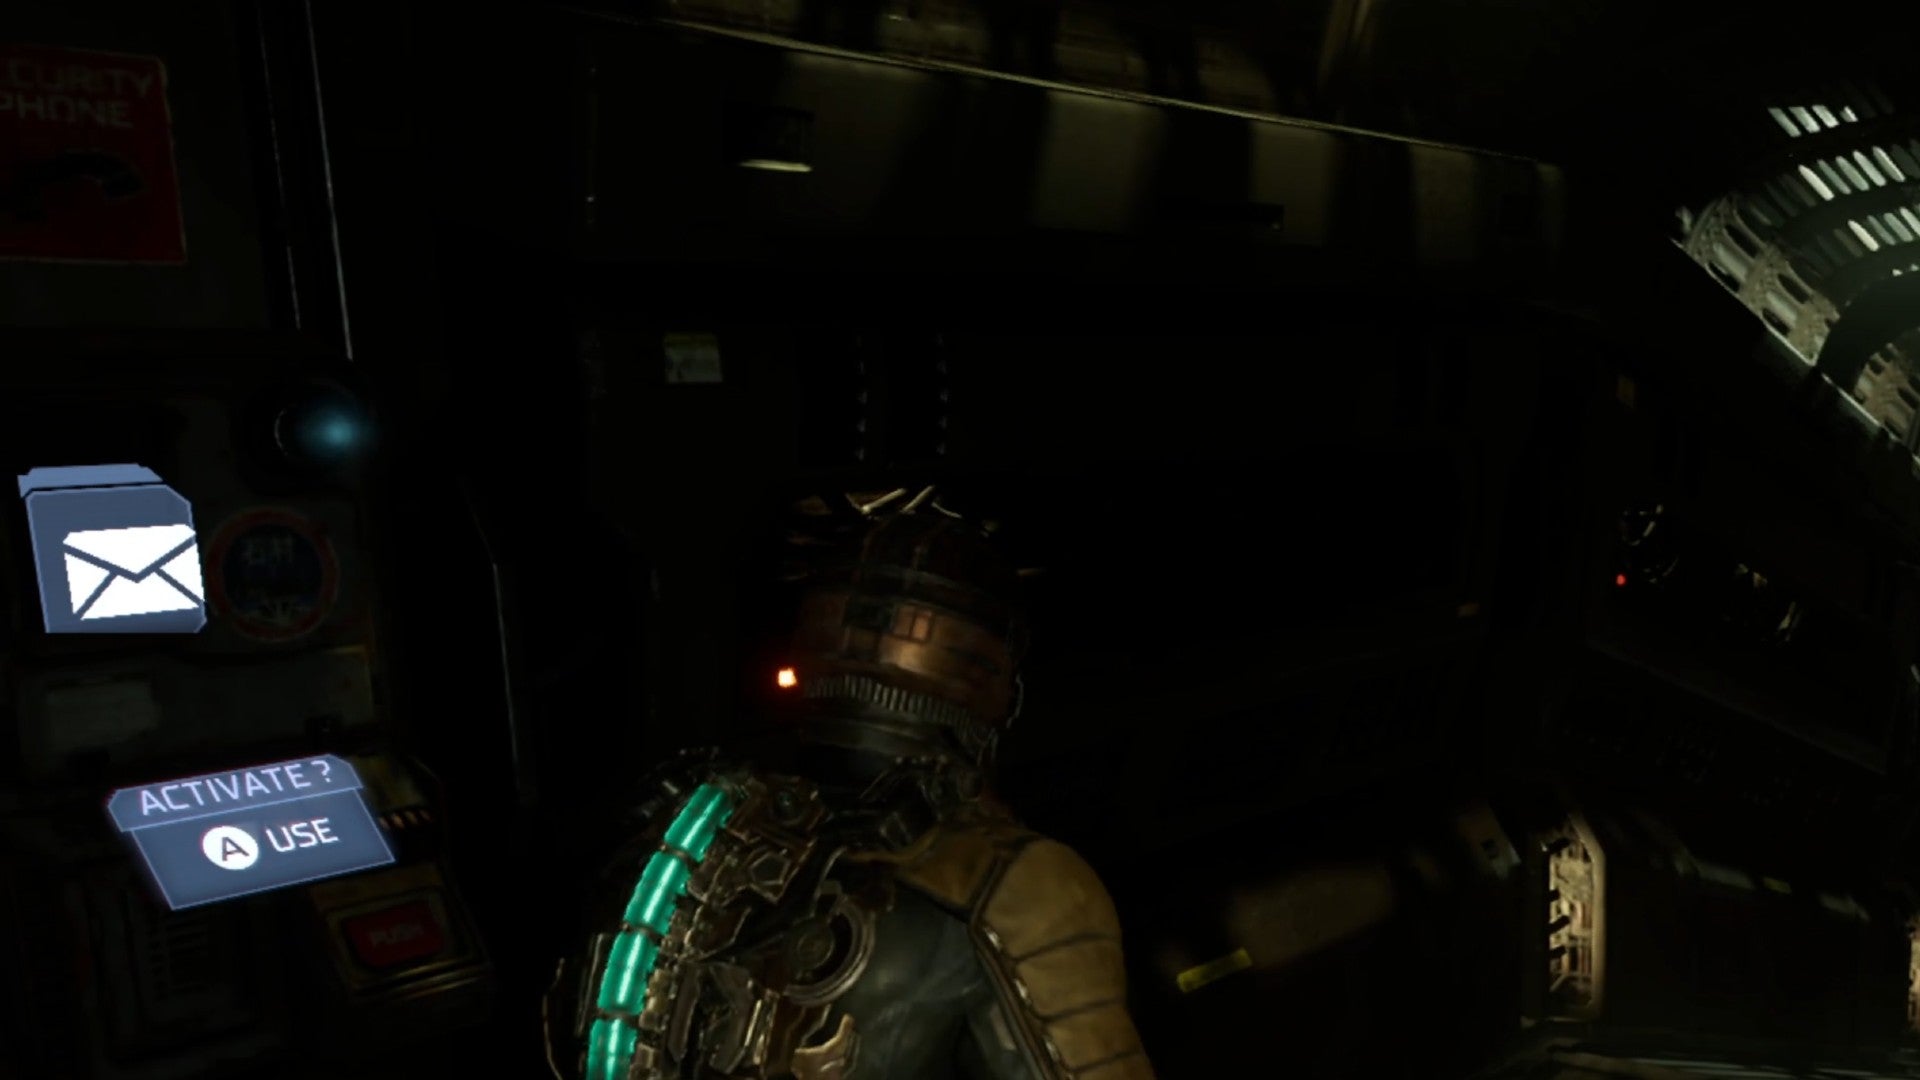 Dead Space image showing an Audio Log terminal in a dark corridor.